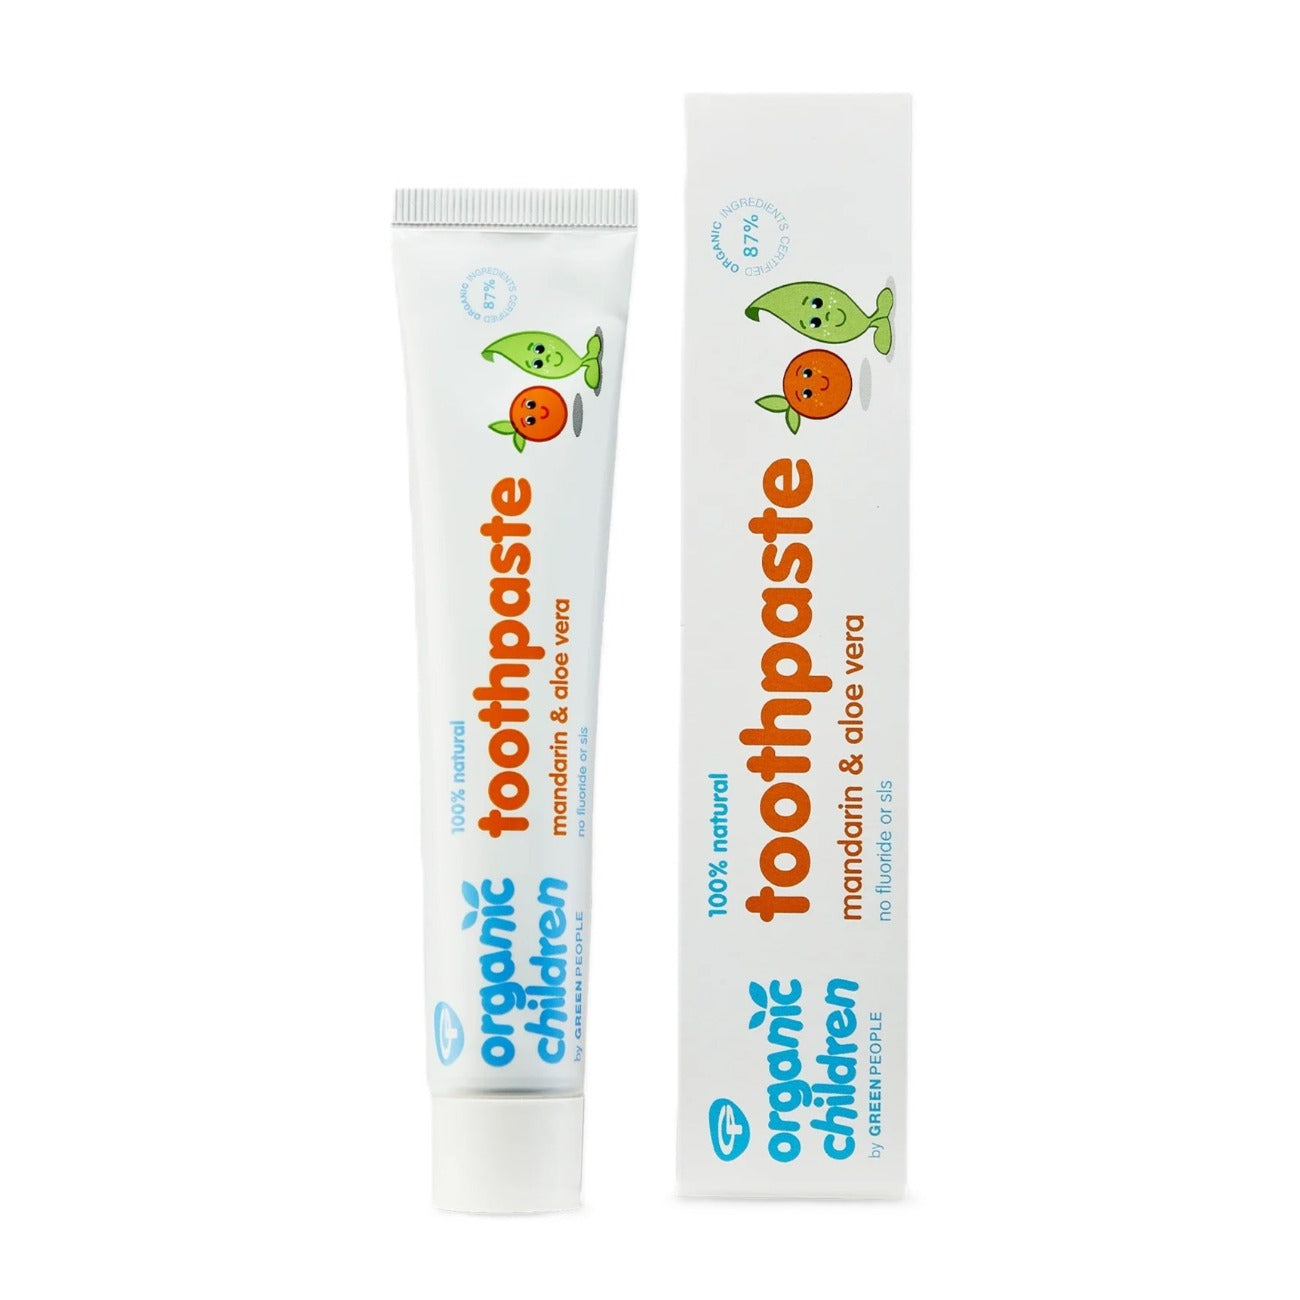 Toothpaste Fluoride Free Children Mandarin & Aloe Vera 50ml